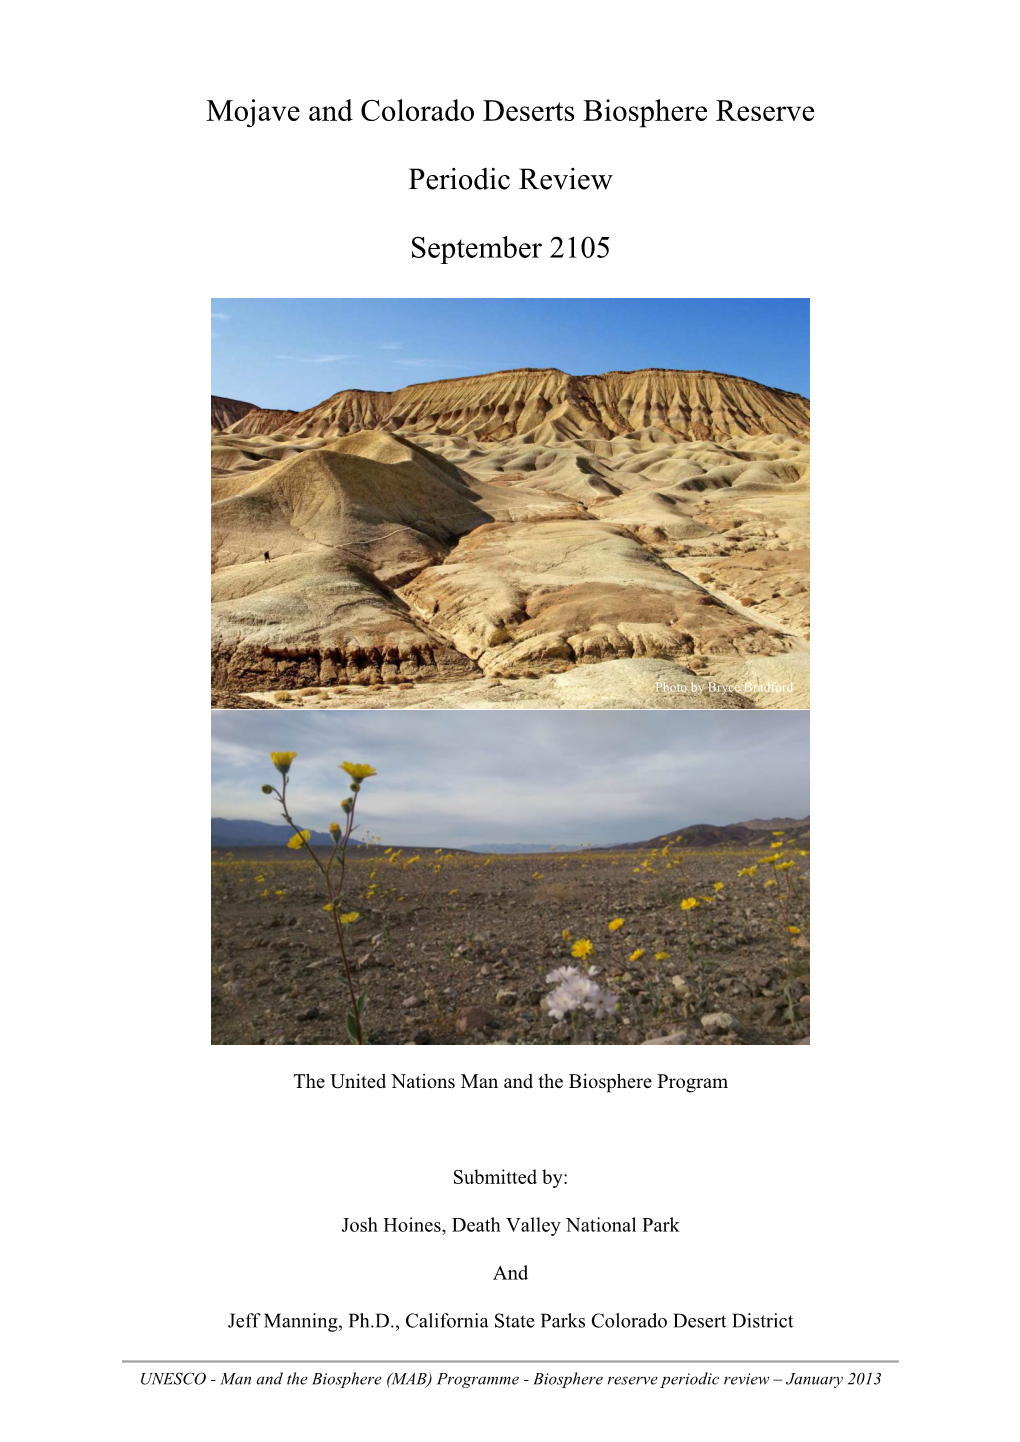 Mojave and Colorado Deserts Biosphere Reserve Periodic